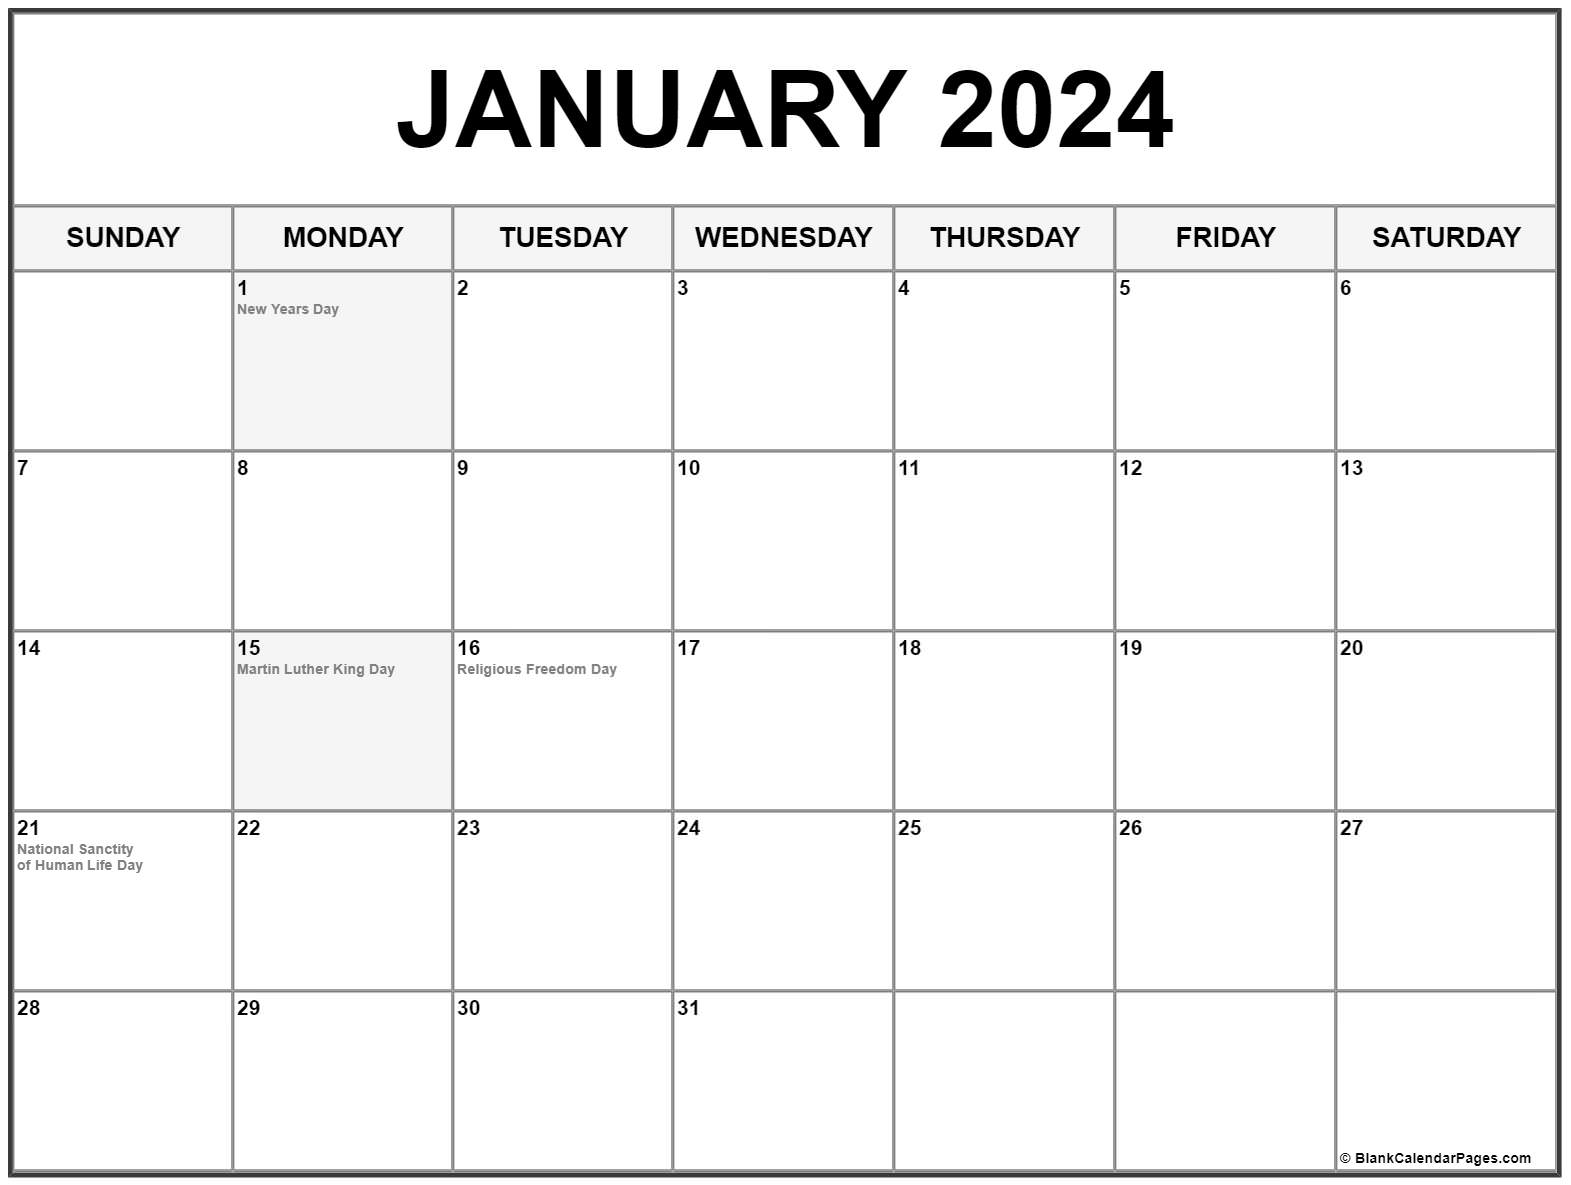 January 2021 Calendar With Holidays January 2021 calendar with holidays